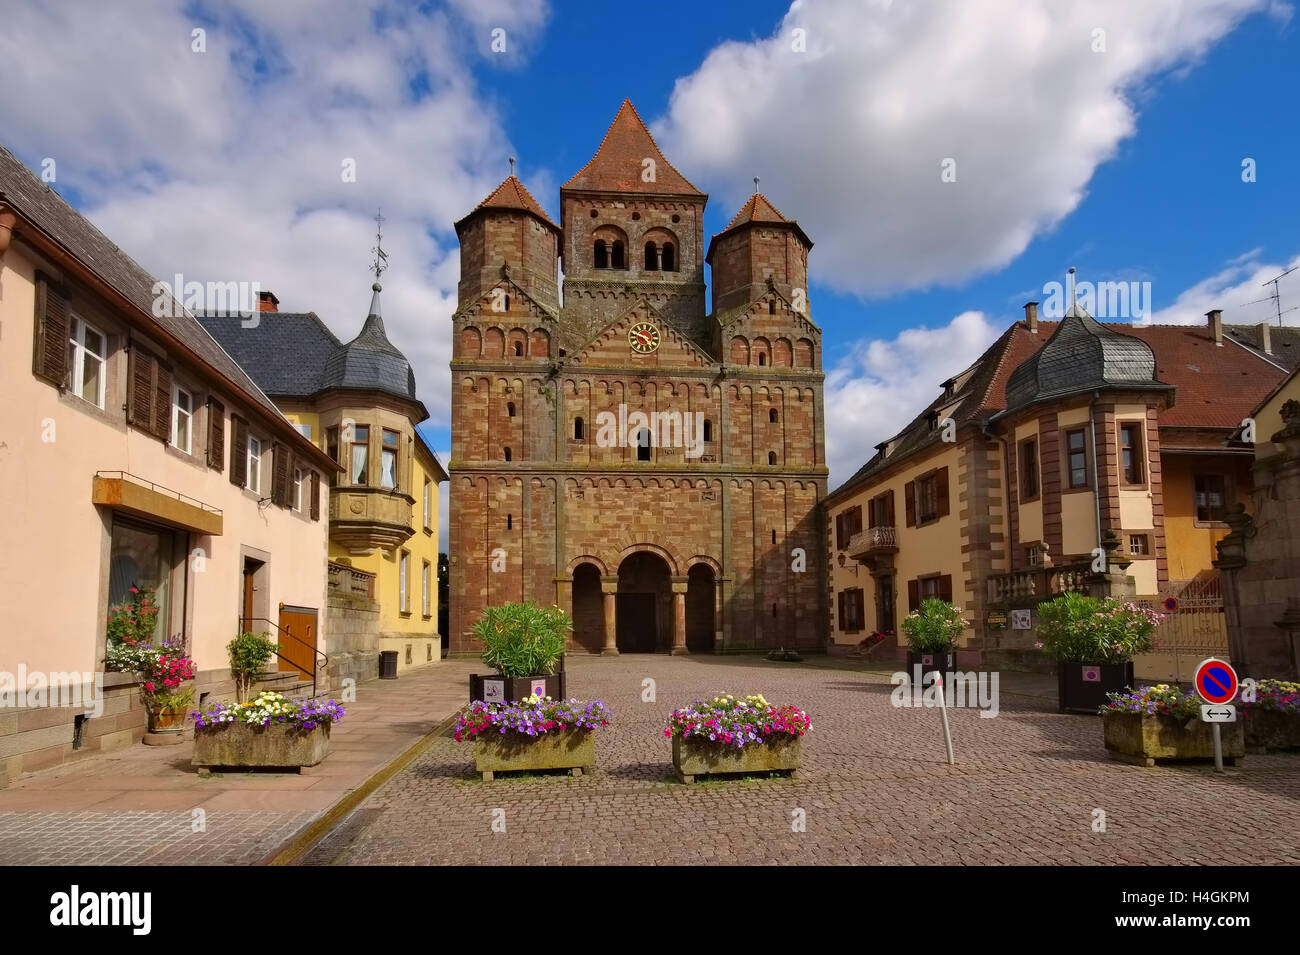 Marmoutier Abbaye Saint-Etienne im Elsass - Marmoutier Abbaye Saint-Etienne in Alsace, France Stock Photo